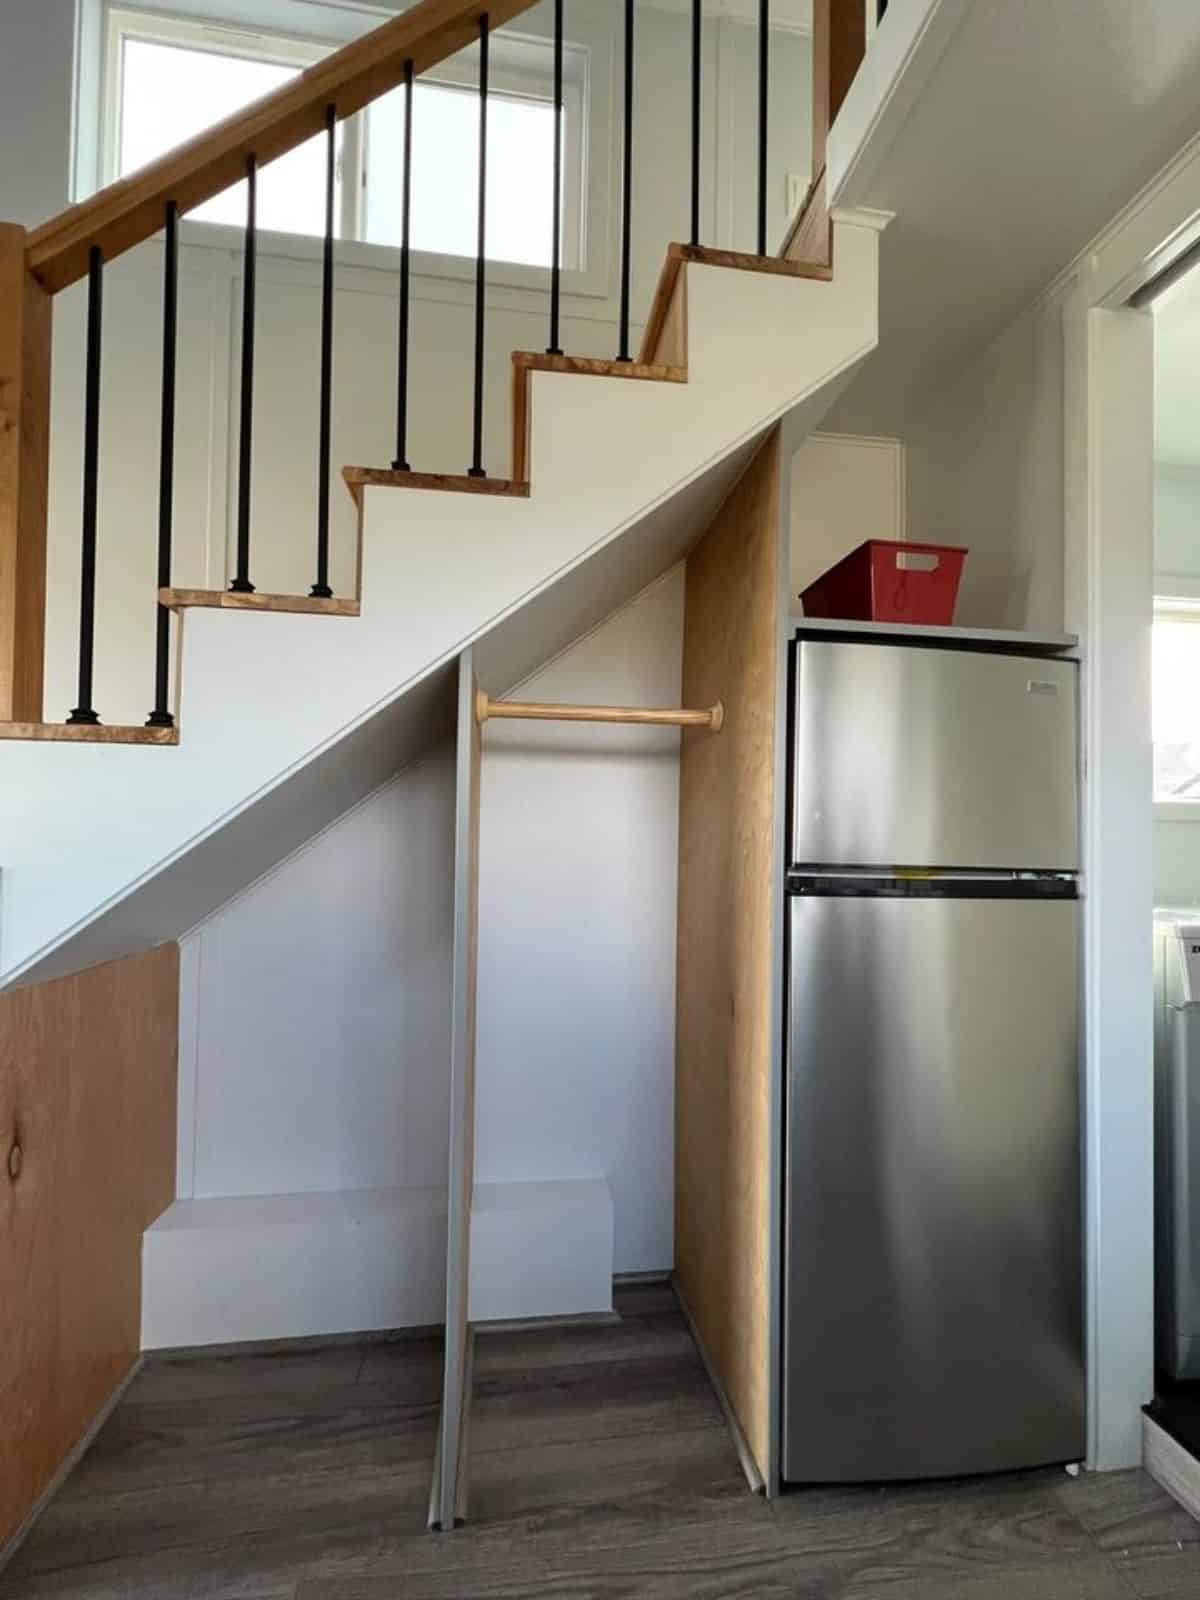 storage underneath the stairs has double door kitchen